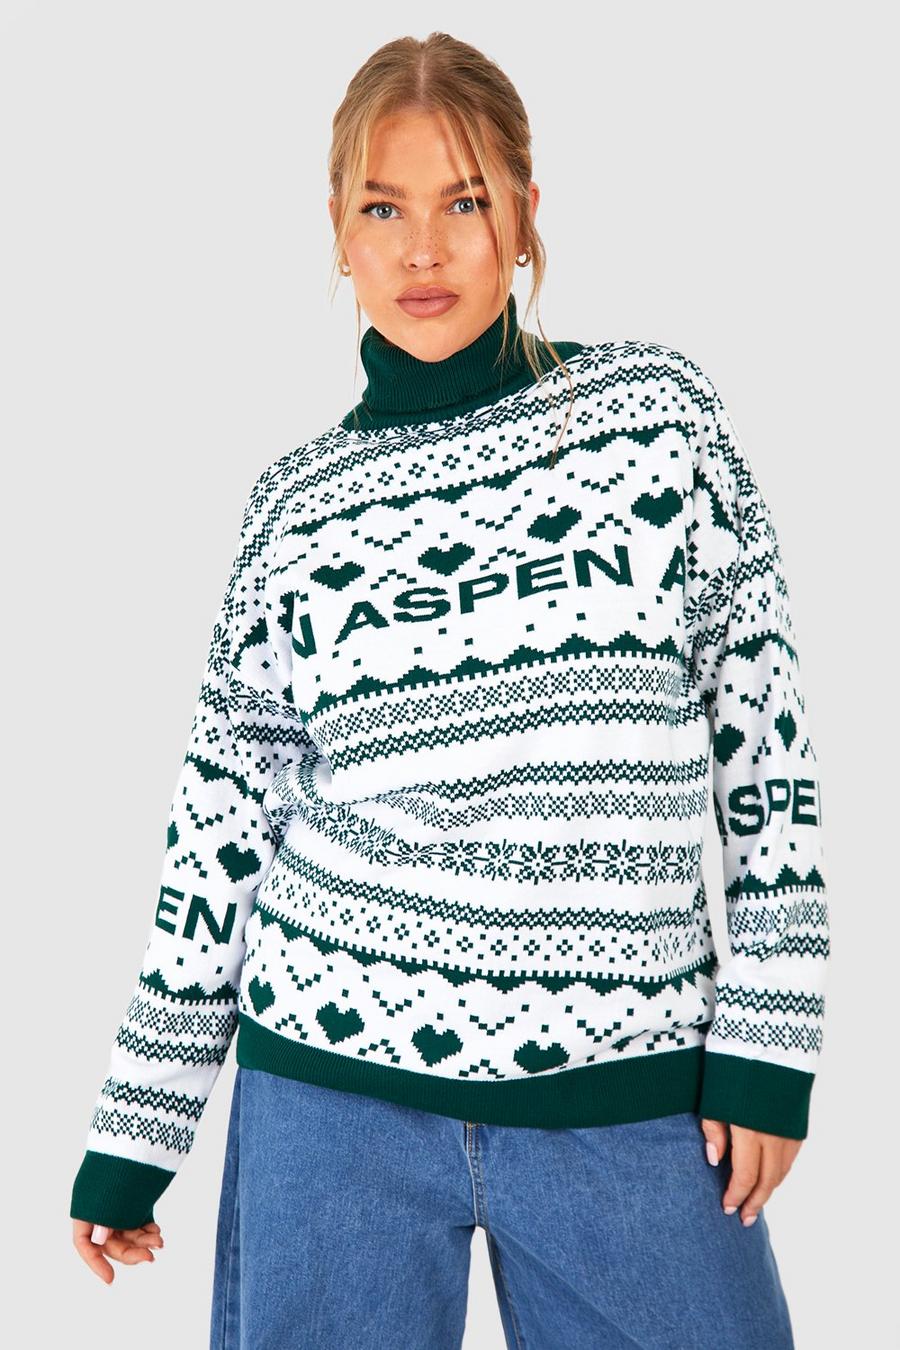 Bottle Plus Turtleneck Aspen Slogan Fairisle Christmas Sweater